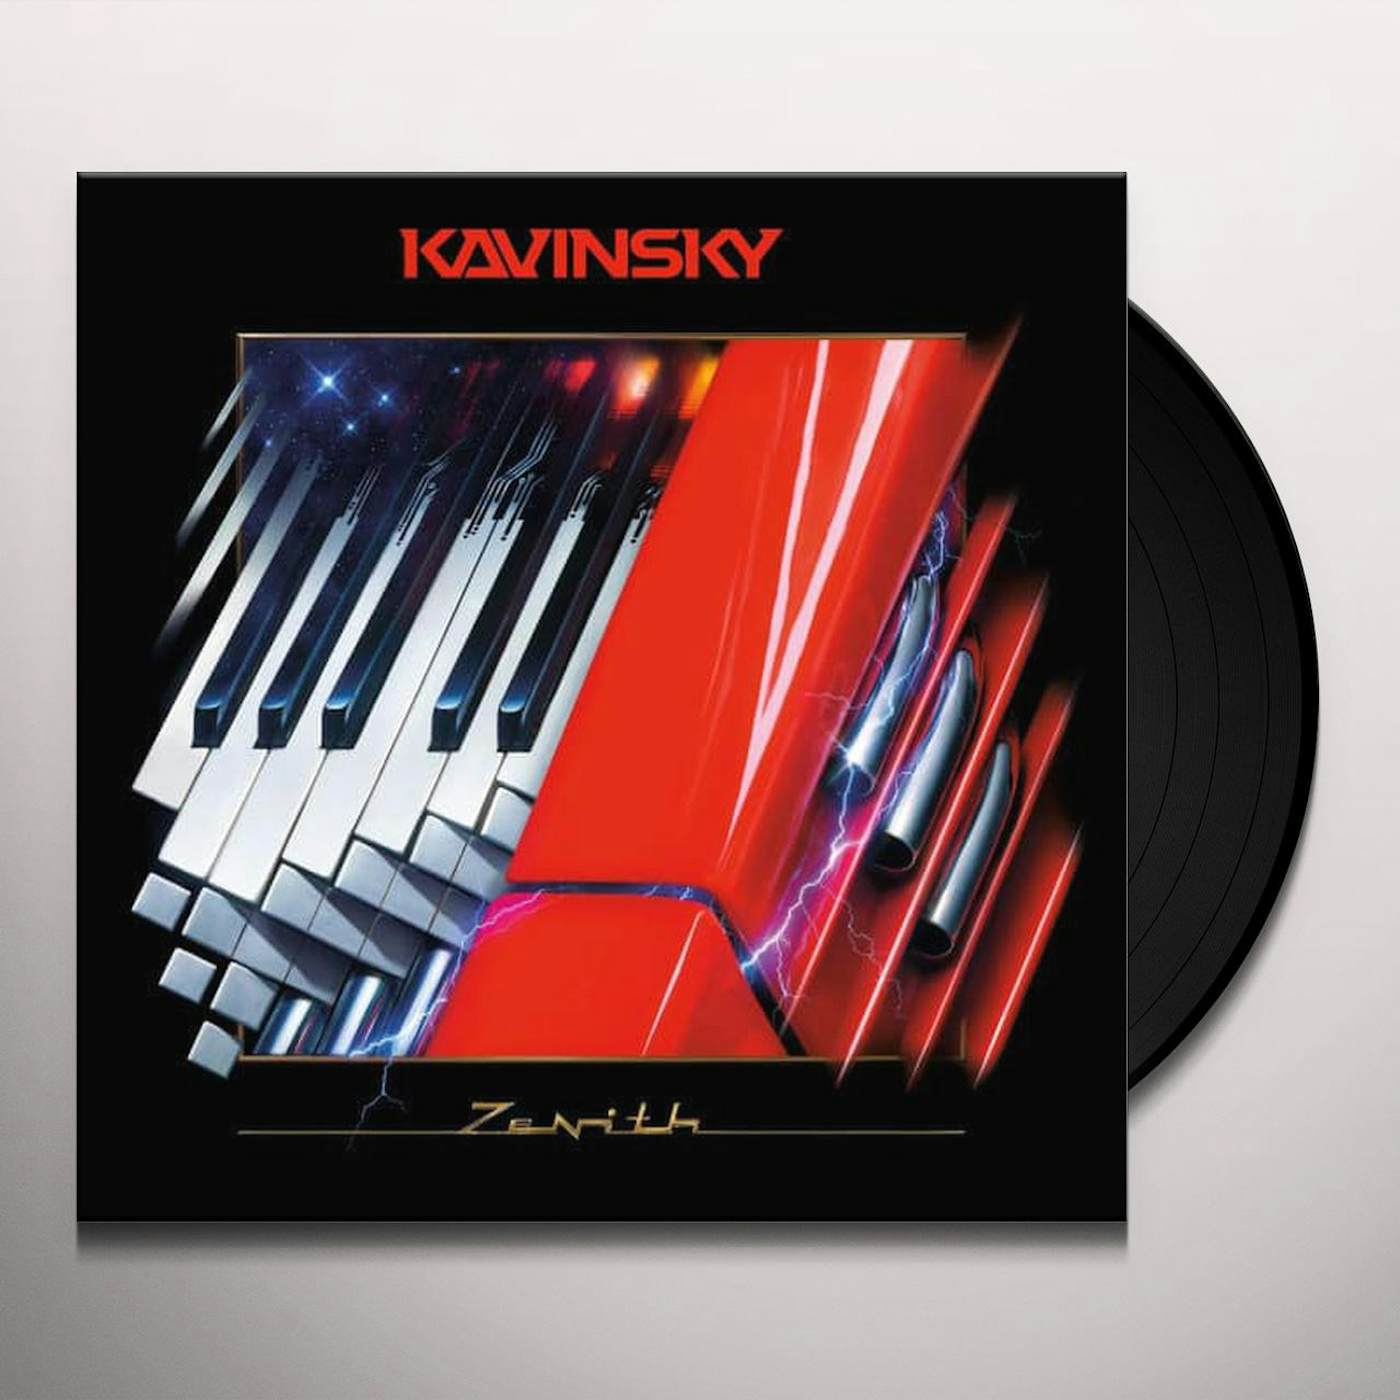 Gripsweat - Kavinsky - Nightcall (12, EP, RE)